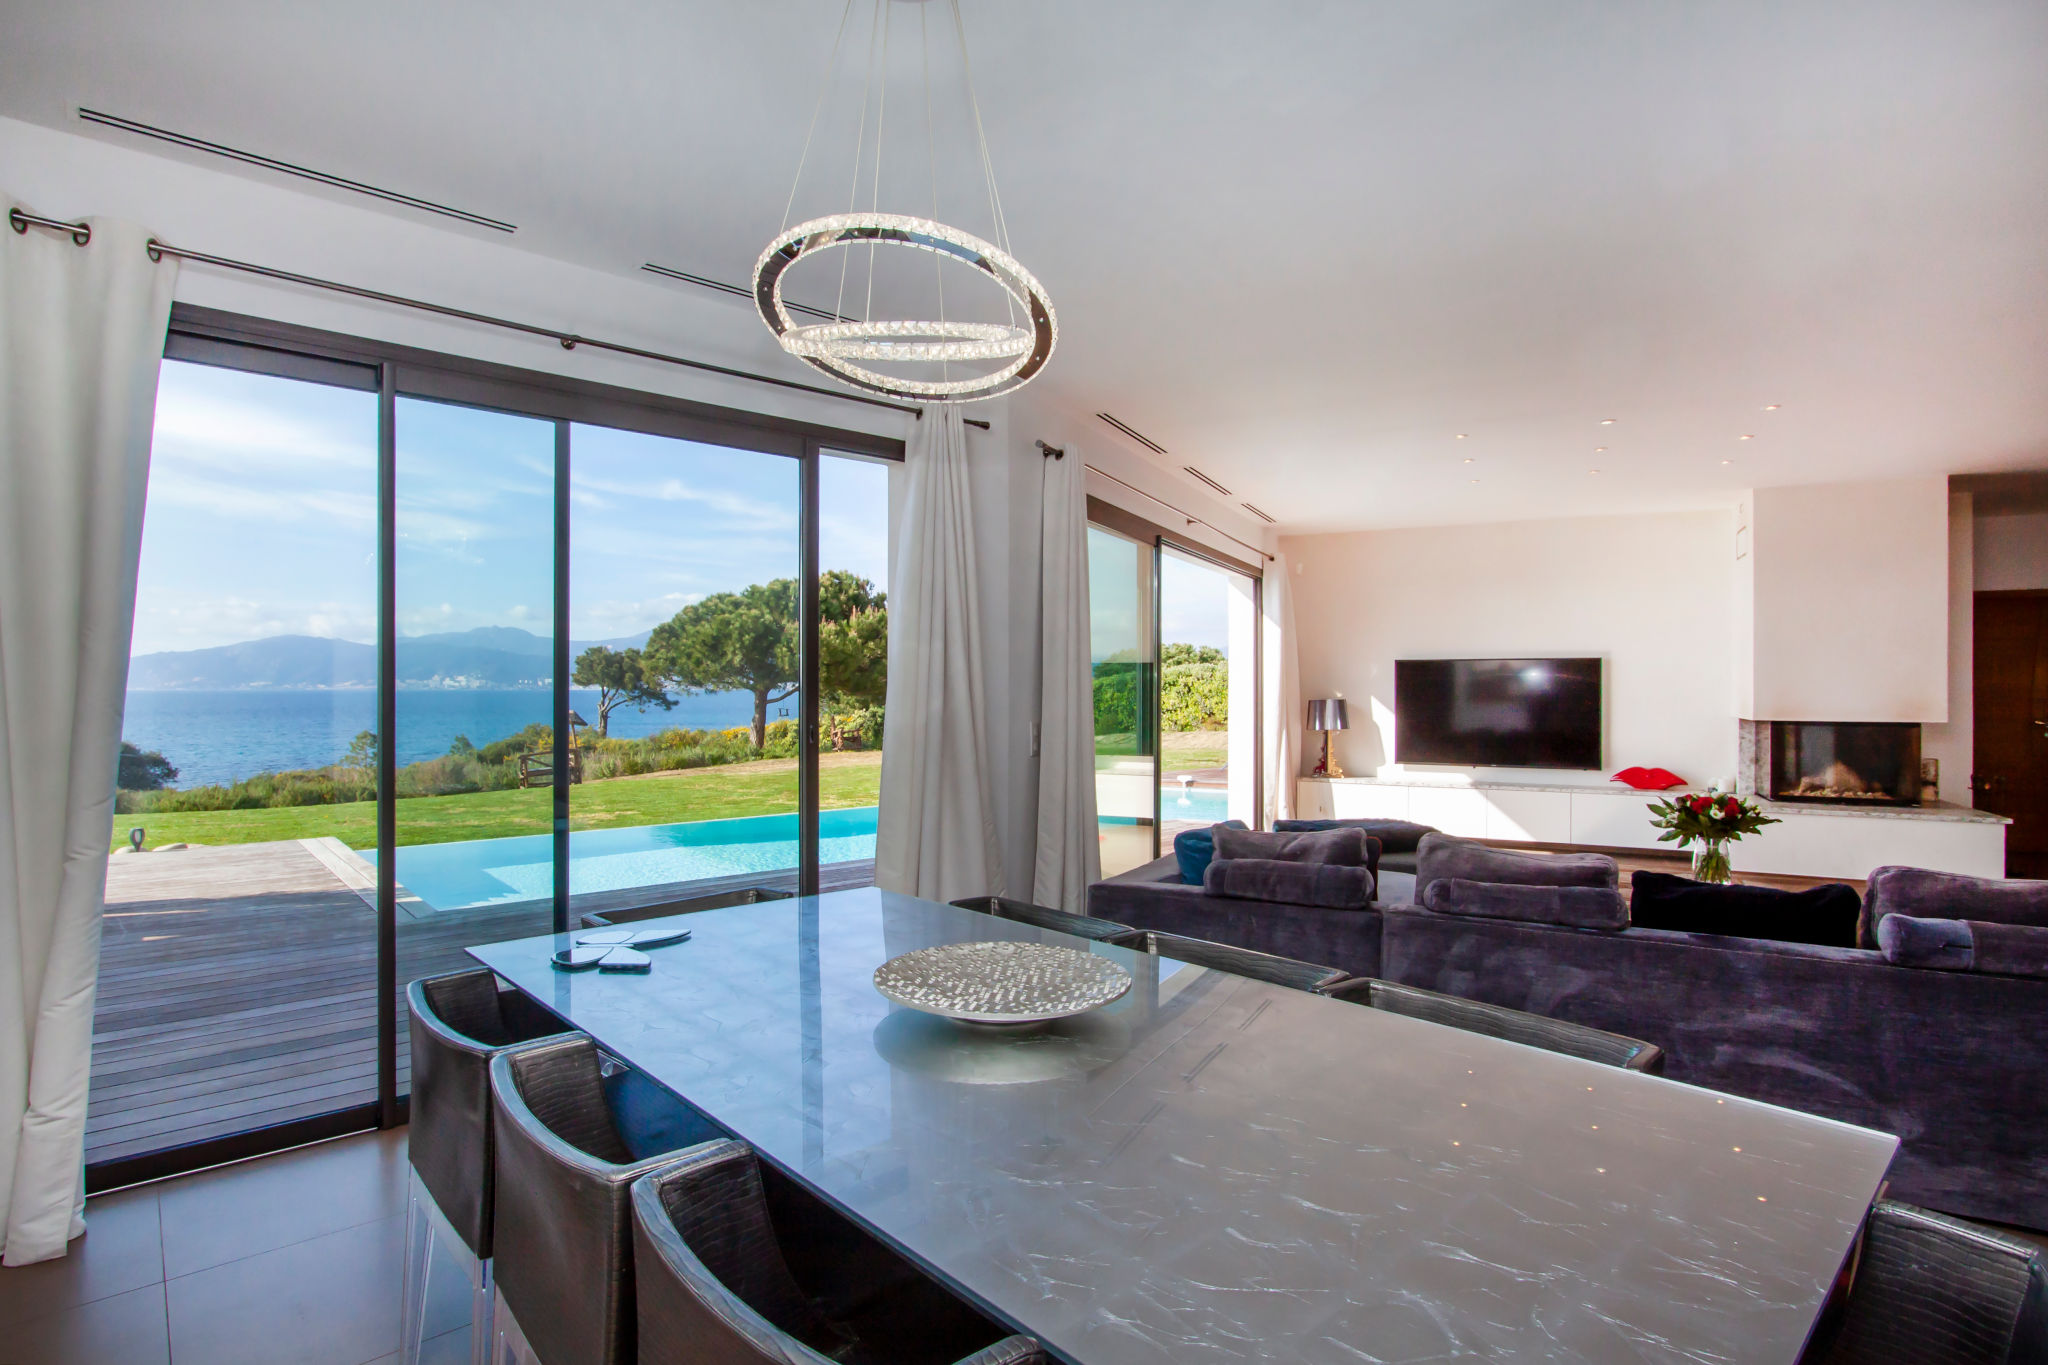 Location villa de luxe Corse, séjour